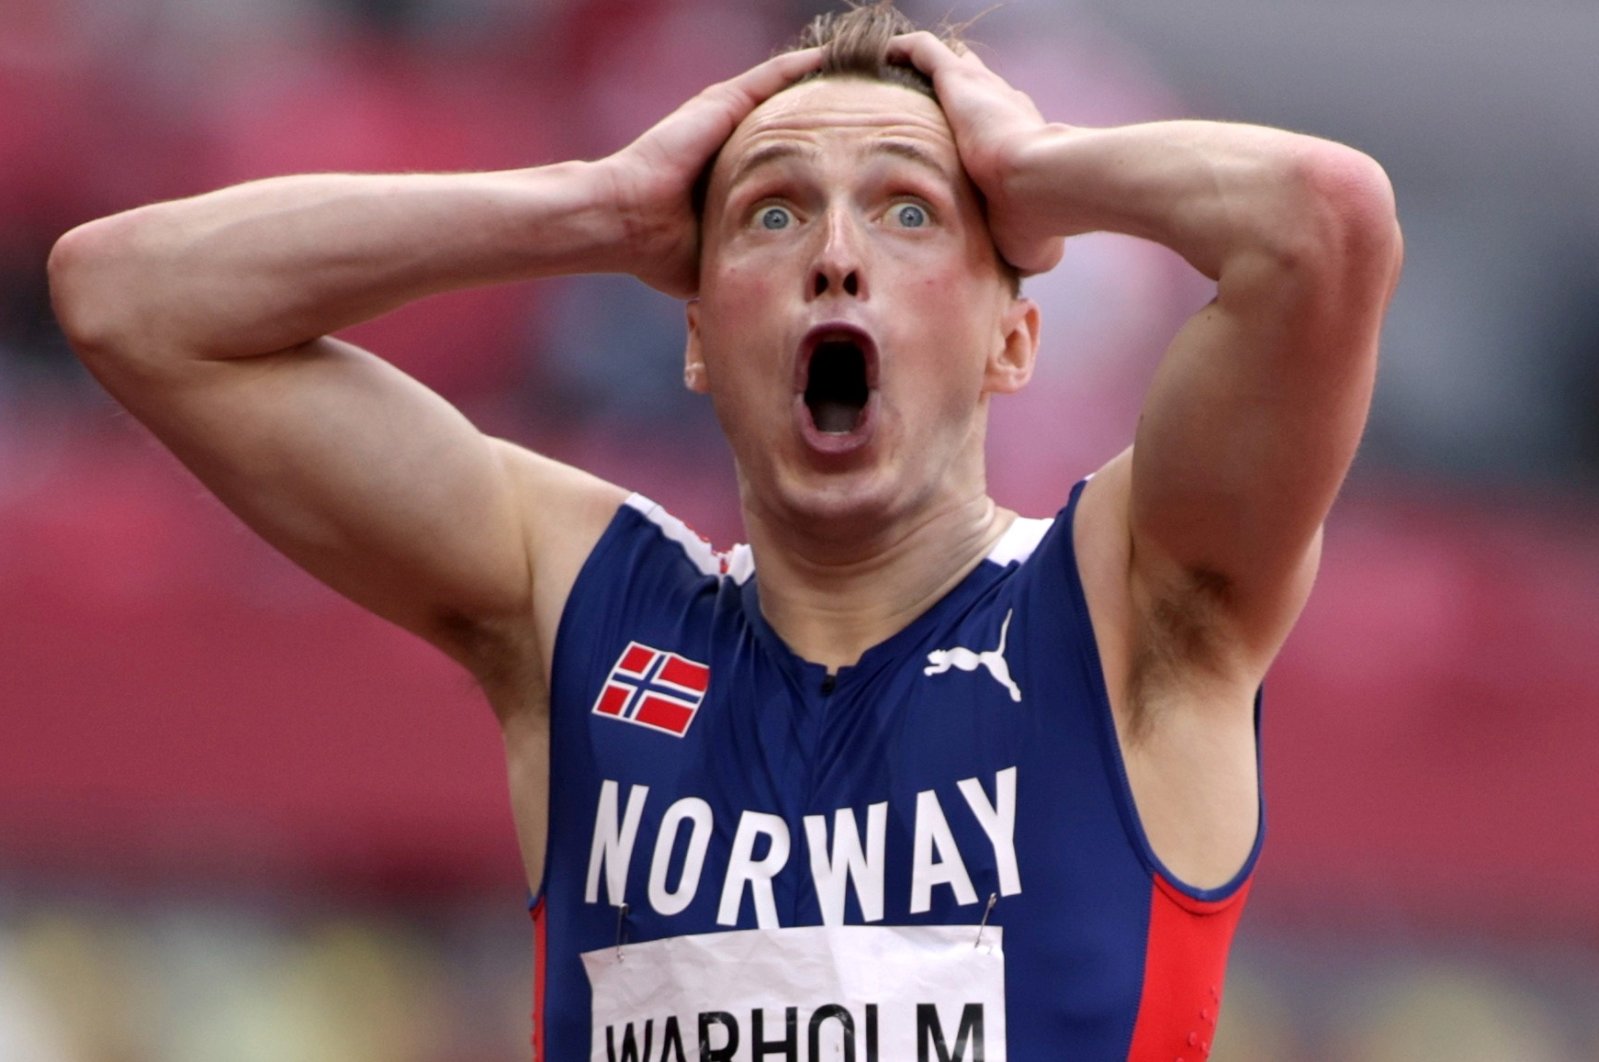 Karsten Warholm of Norway celebrates after winning 400-meter hurdles gold at the Tokyo 2020 Olympics, Tokyo, Japan, Aug. 3, 2021. (Reuters Photo) 